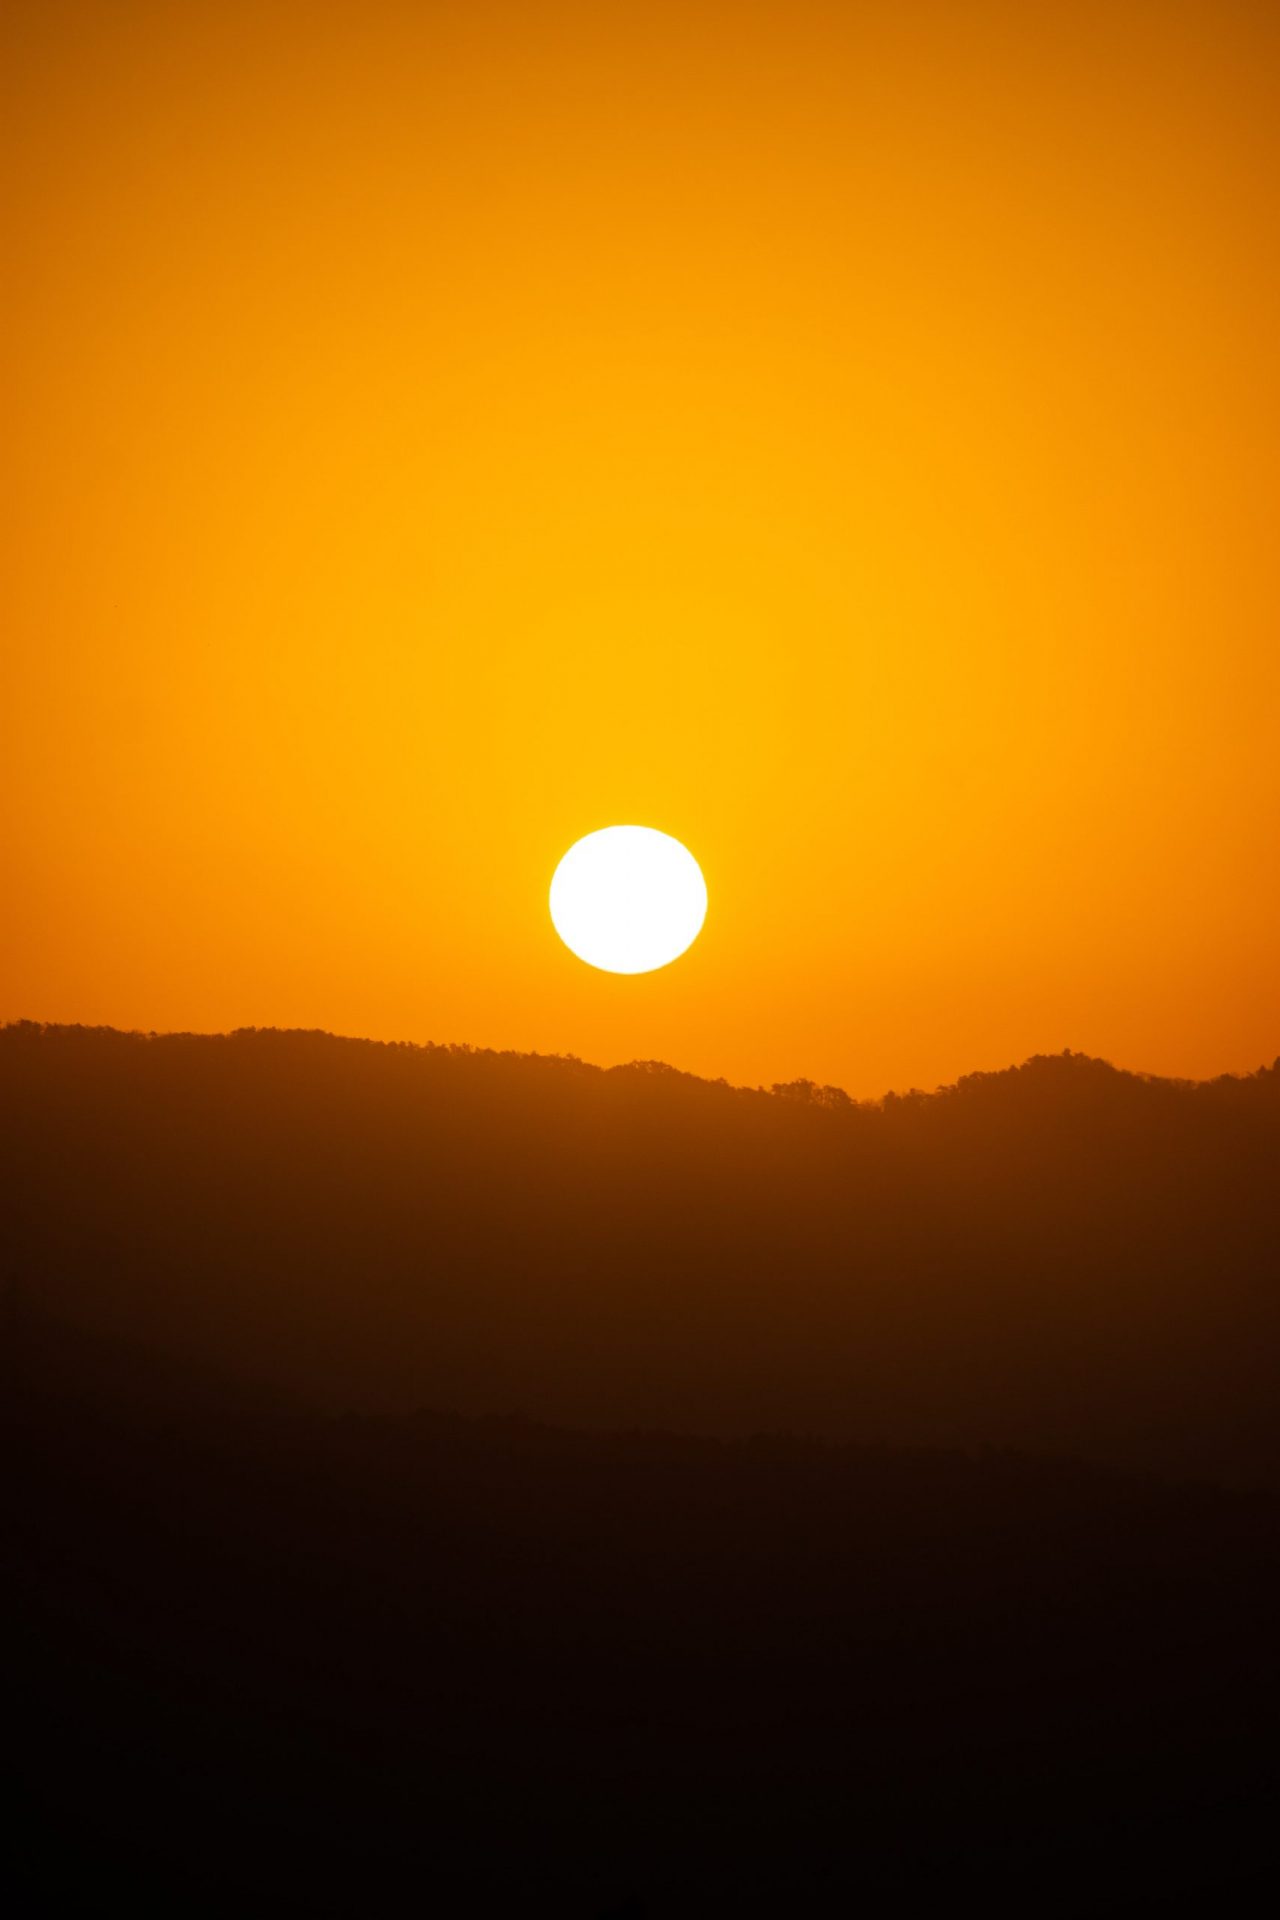 Rising sun over the mountains minimalist photograph